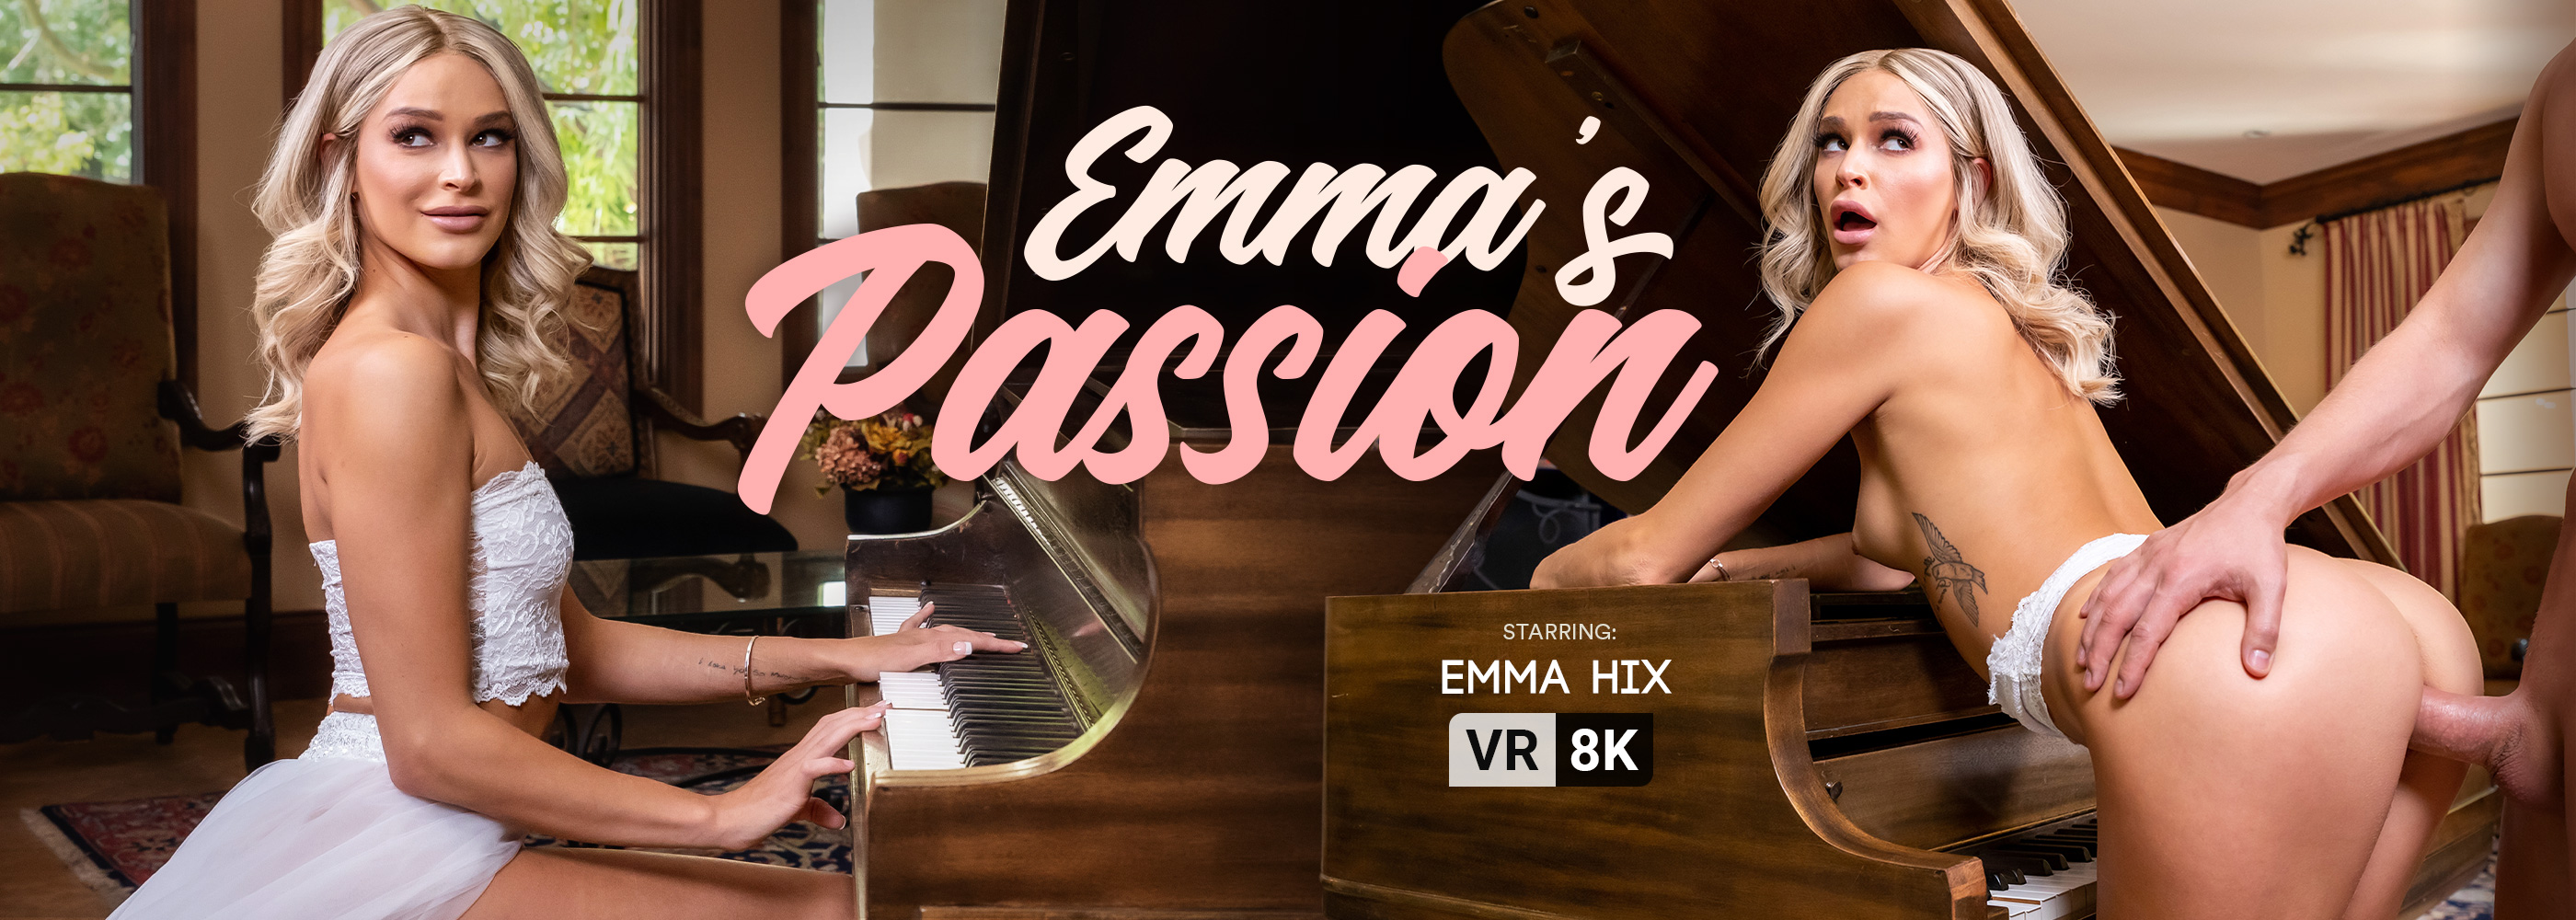 Emma's Passion - VR Porn Video, Starring: Emma Hix